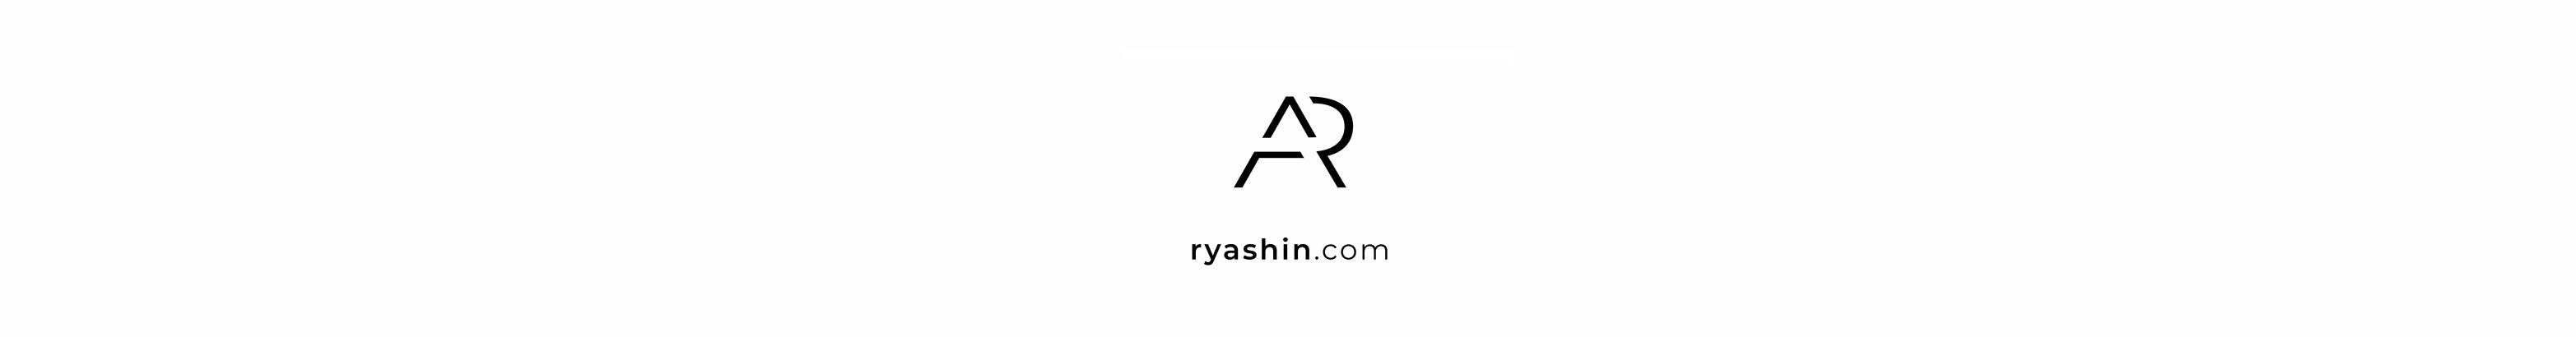 Alexander Ryashin's profile banner